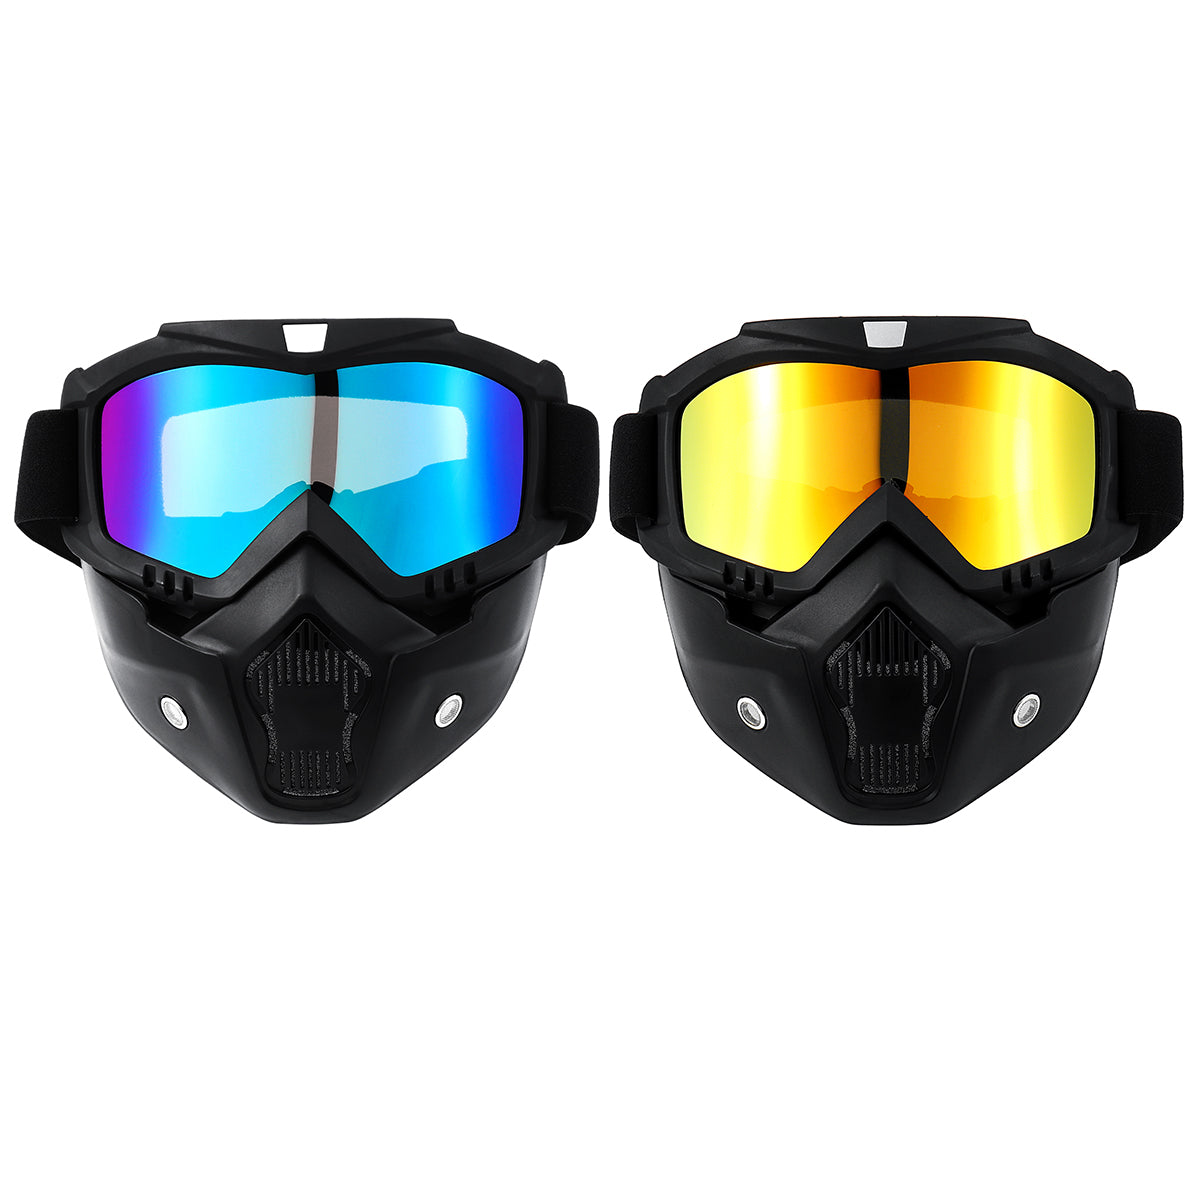 Khaki Detachable Motorcycle Face Mask Shield Goggles Off Road Motocross MX ATV Dirt Bike Glasses Eyewear